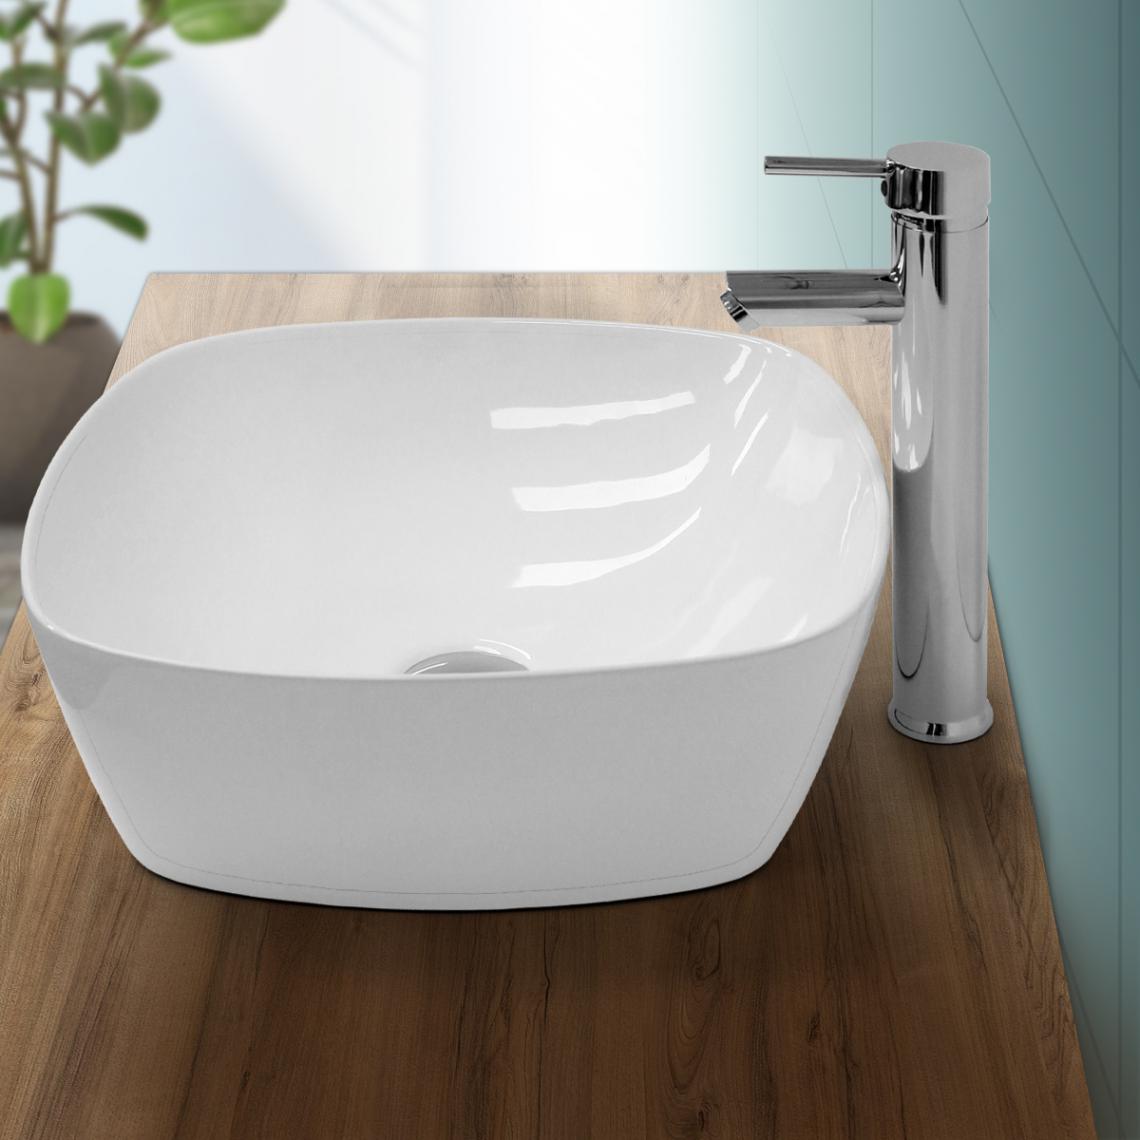 Ecd Germany - Lavabo en céramique blanche vasque a poser ovale évier moderne 405x405x140 mm - Lavabo